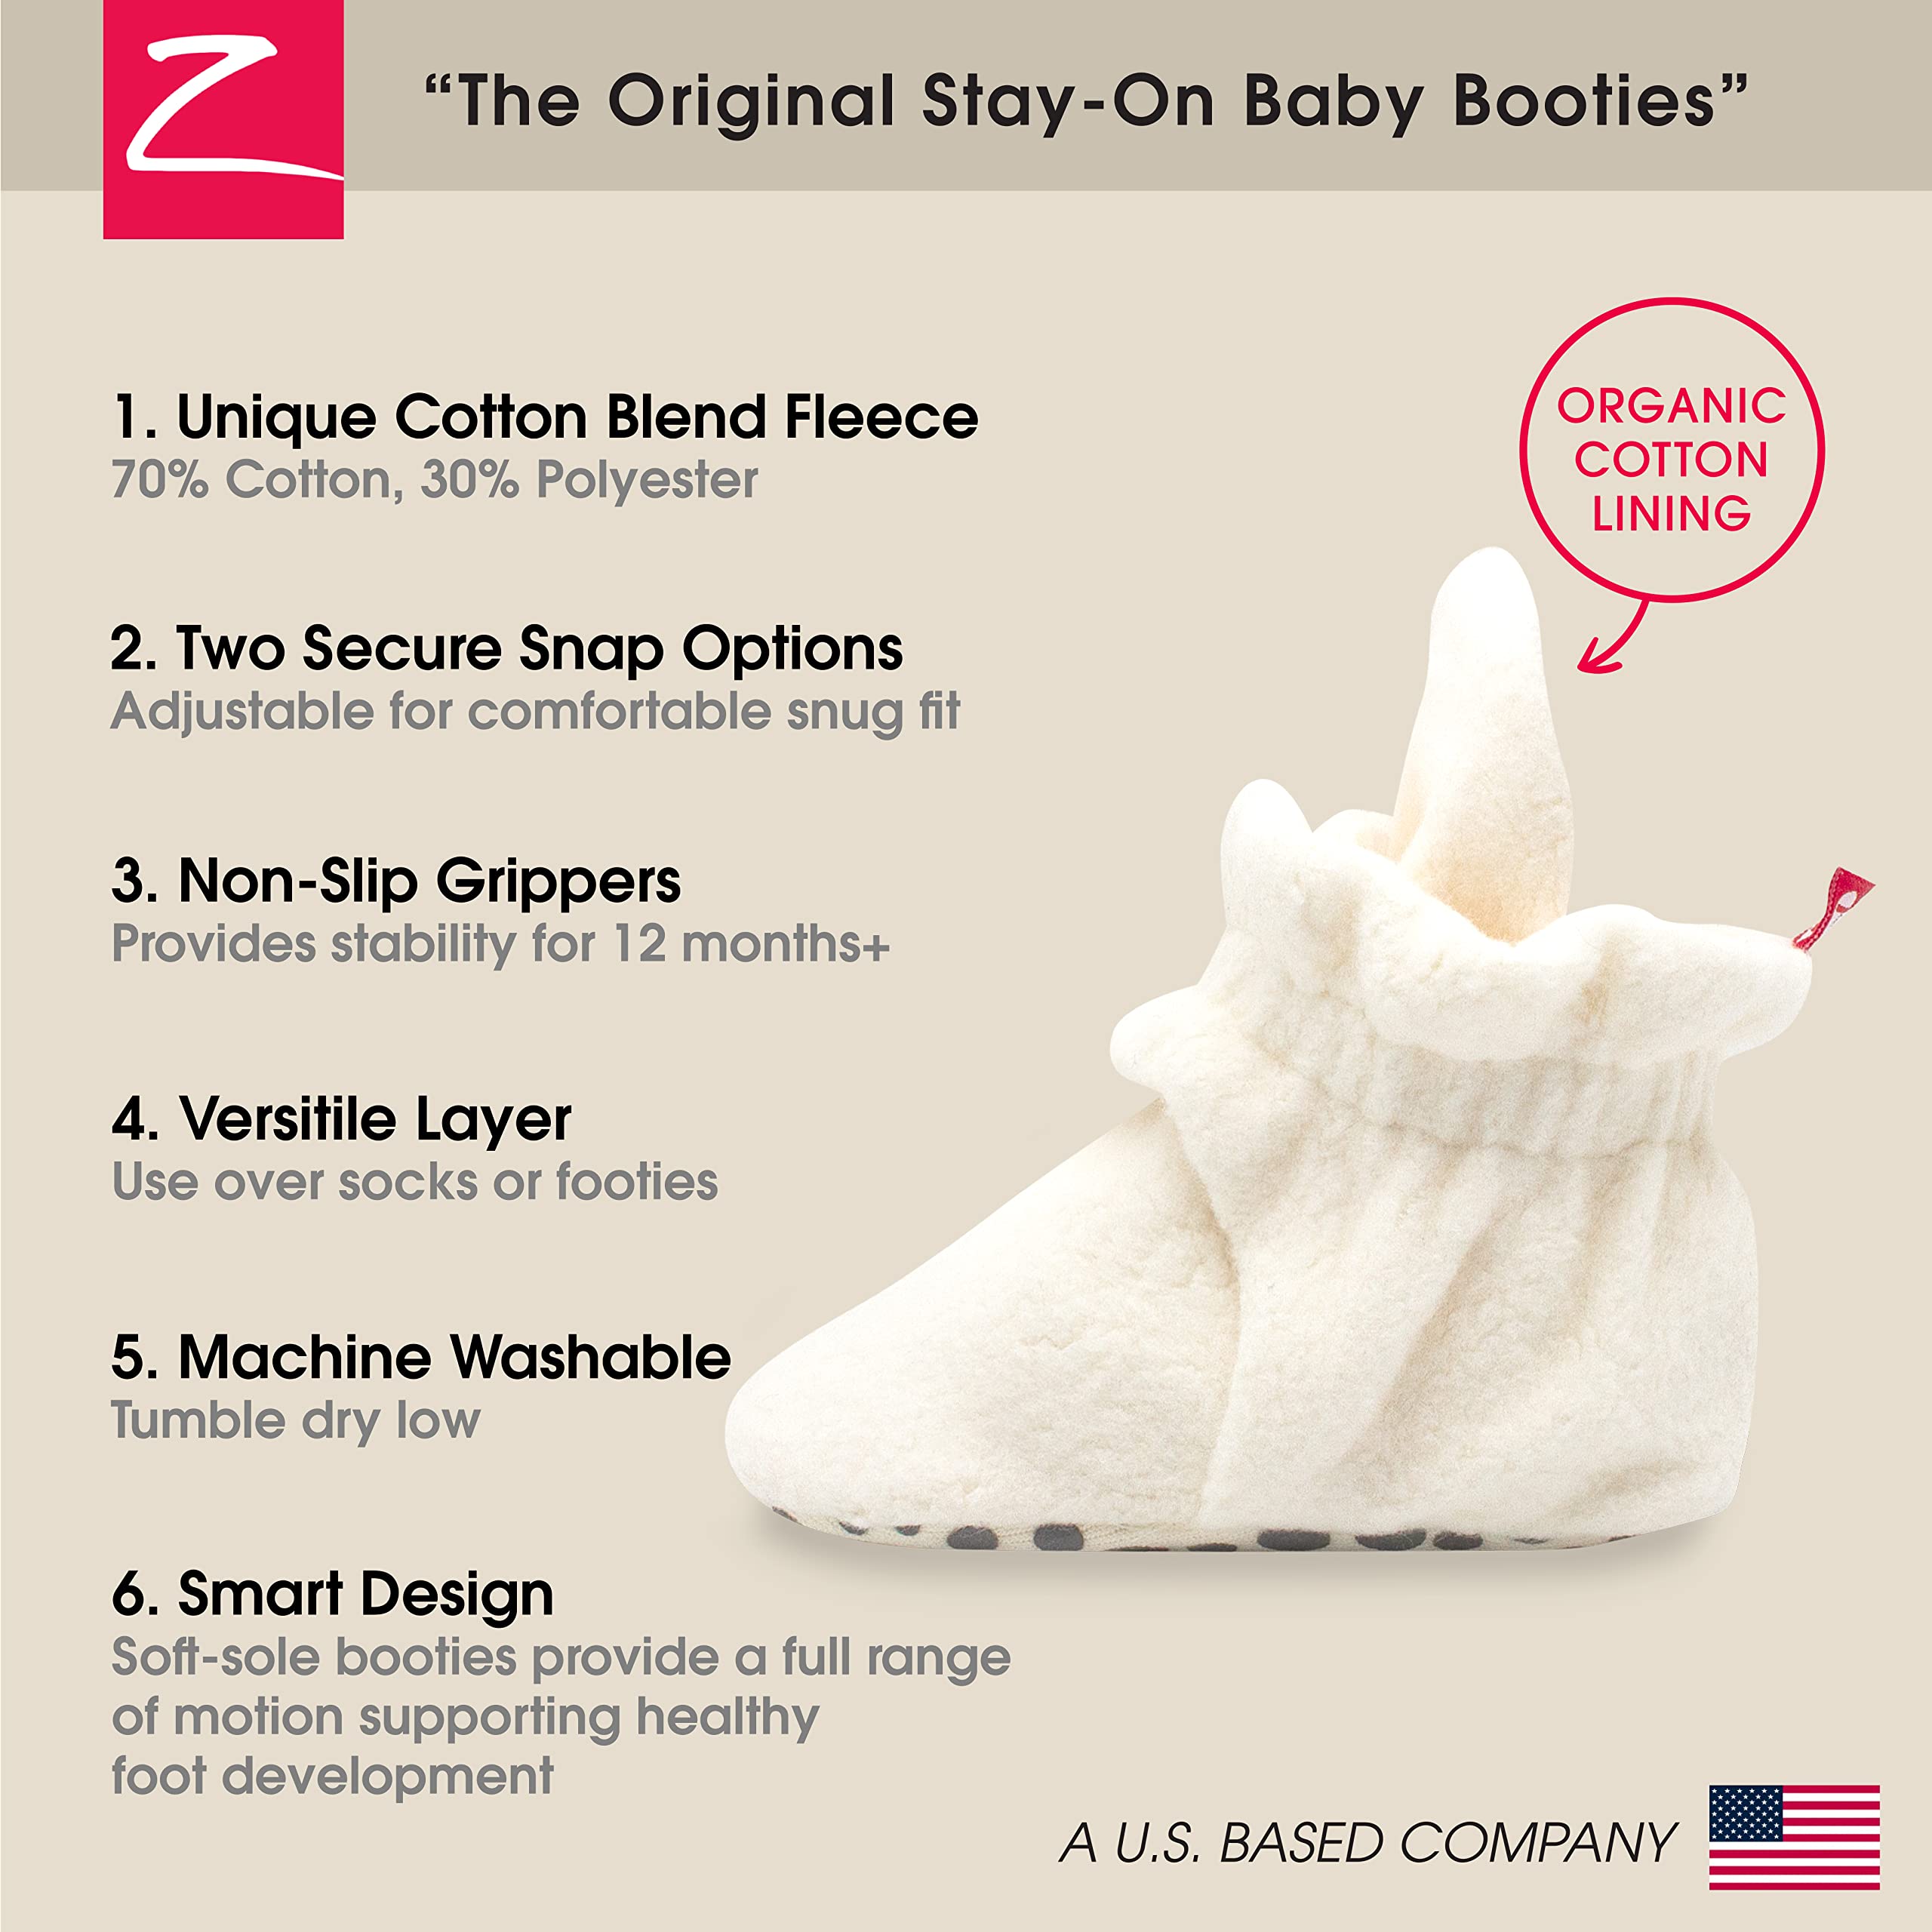 Zutano Unisex Fleece Baby Booties, Soft Sole and Non Slip | Stay On Slipper Socks for Infant/Toddler, Girls, Boys 3-24 Months